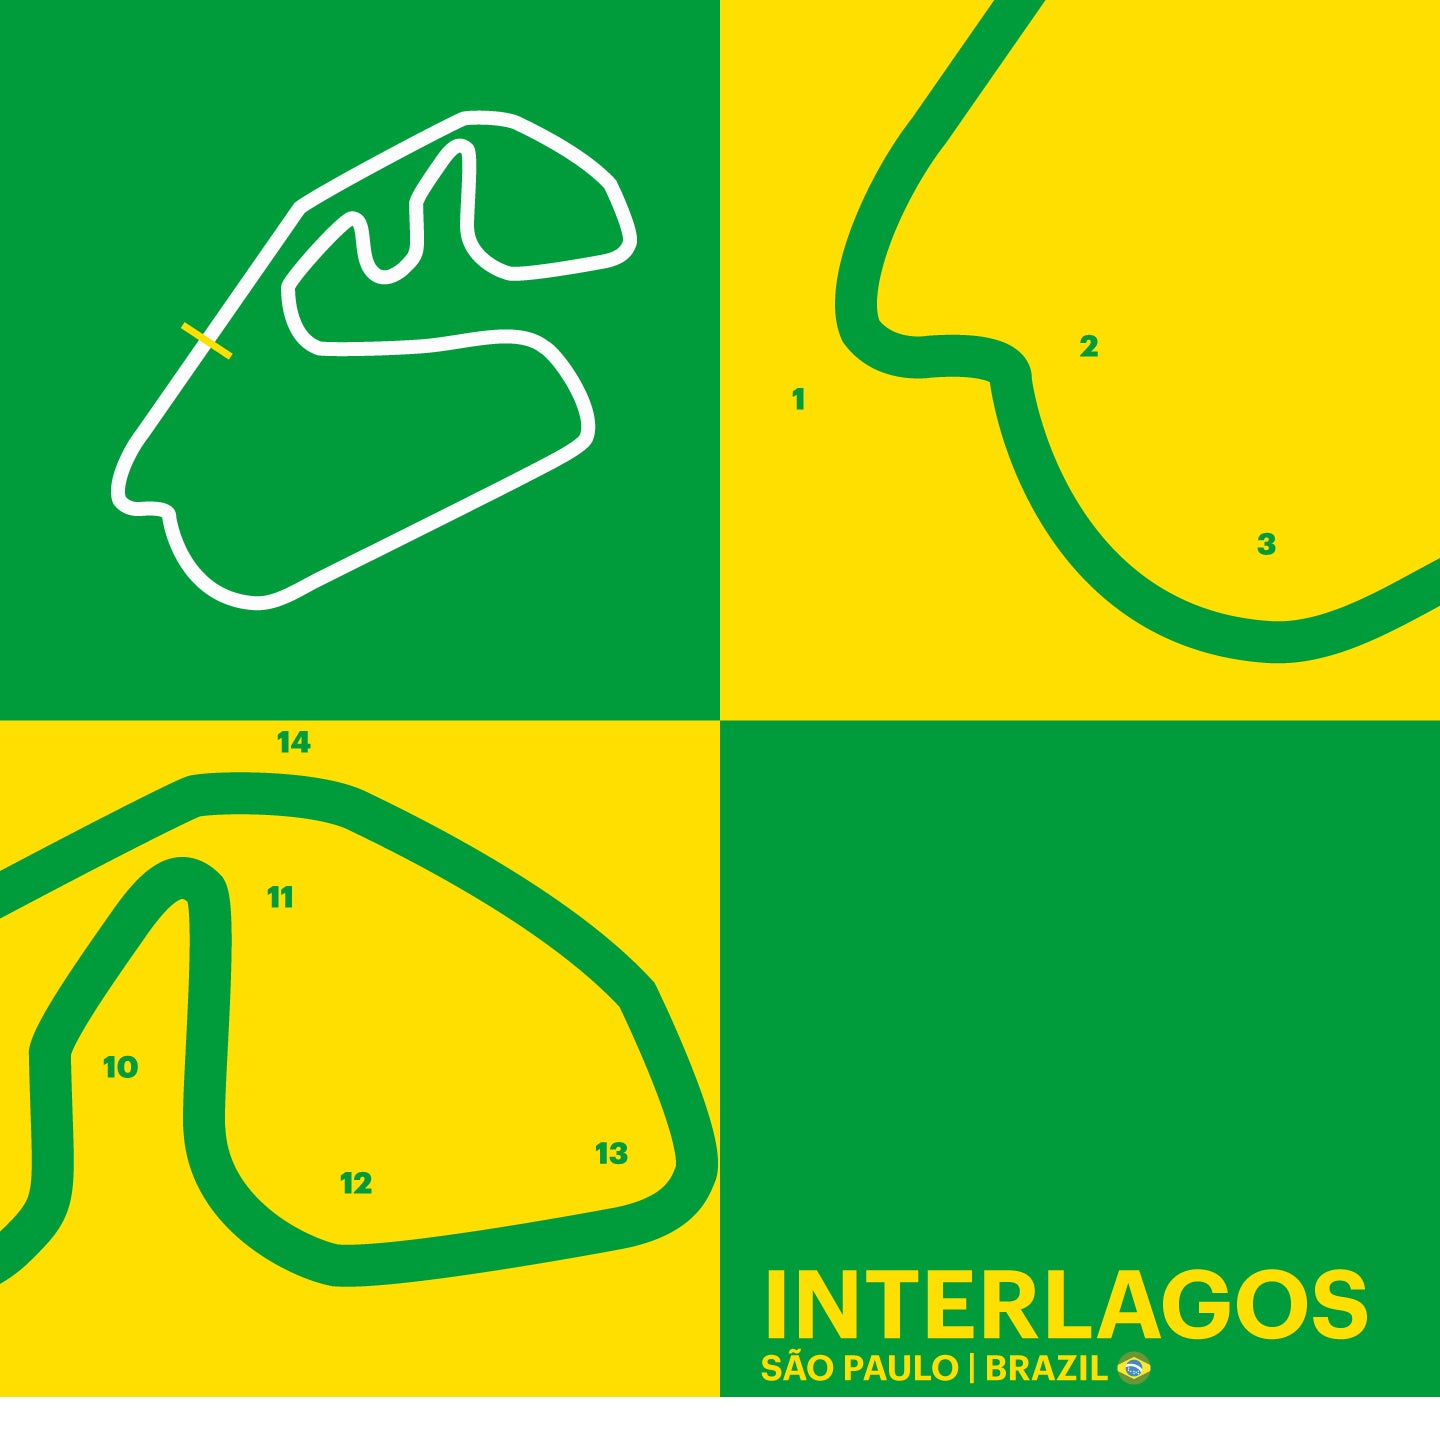 Interlagos - Garagista Series